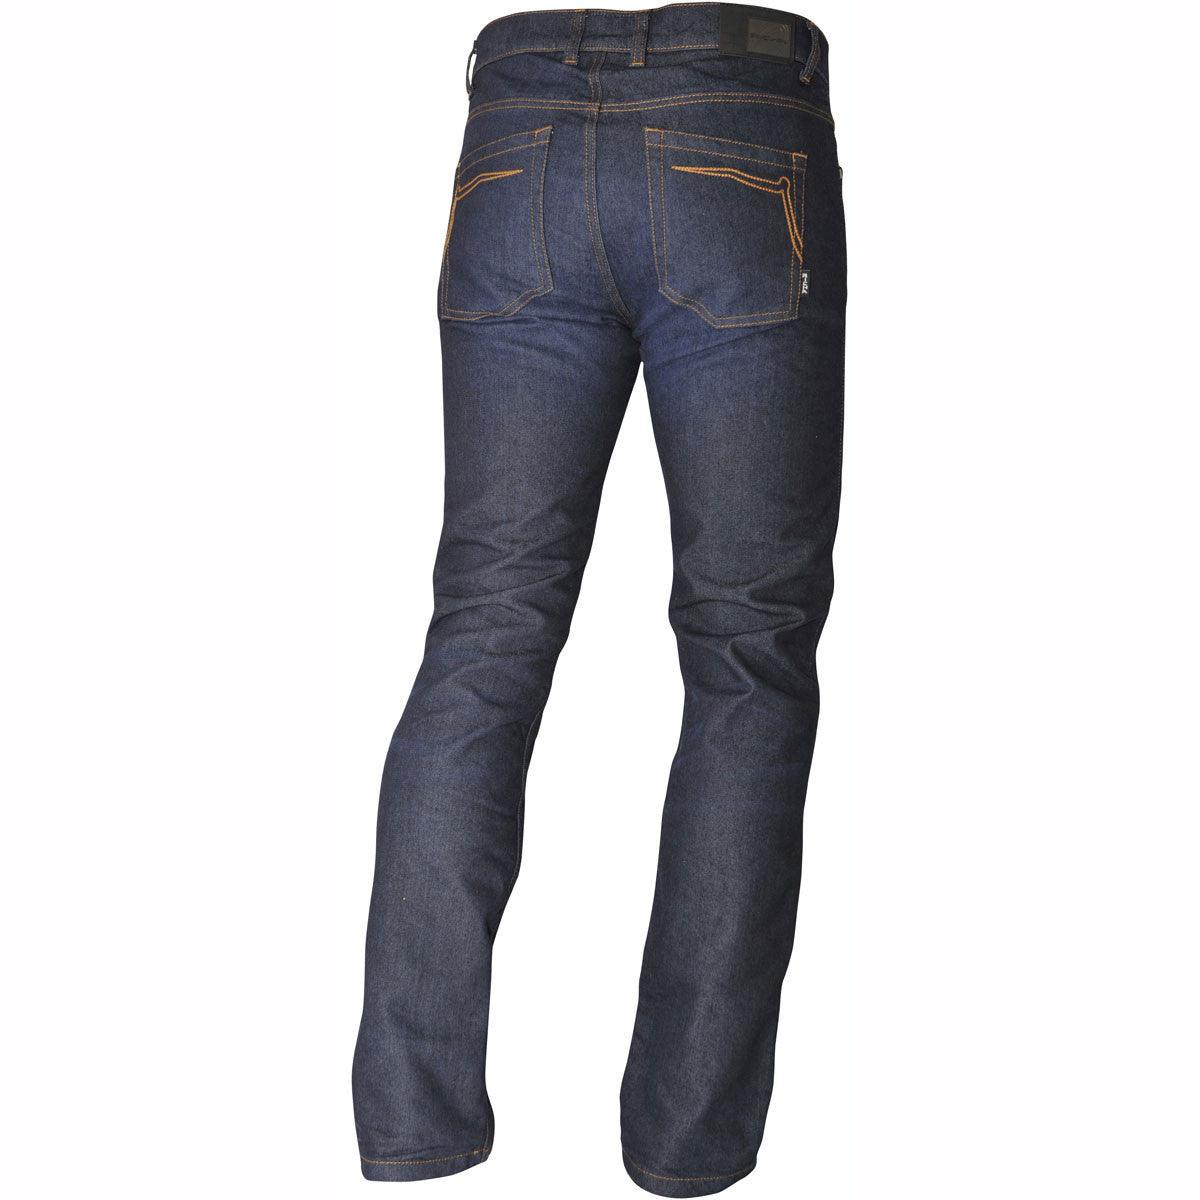 Richa Original Straight Cut Jeans 32in Leg CE Denim Blue - Armoured Jeans